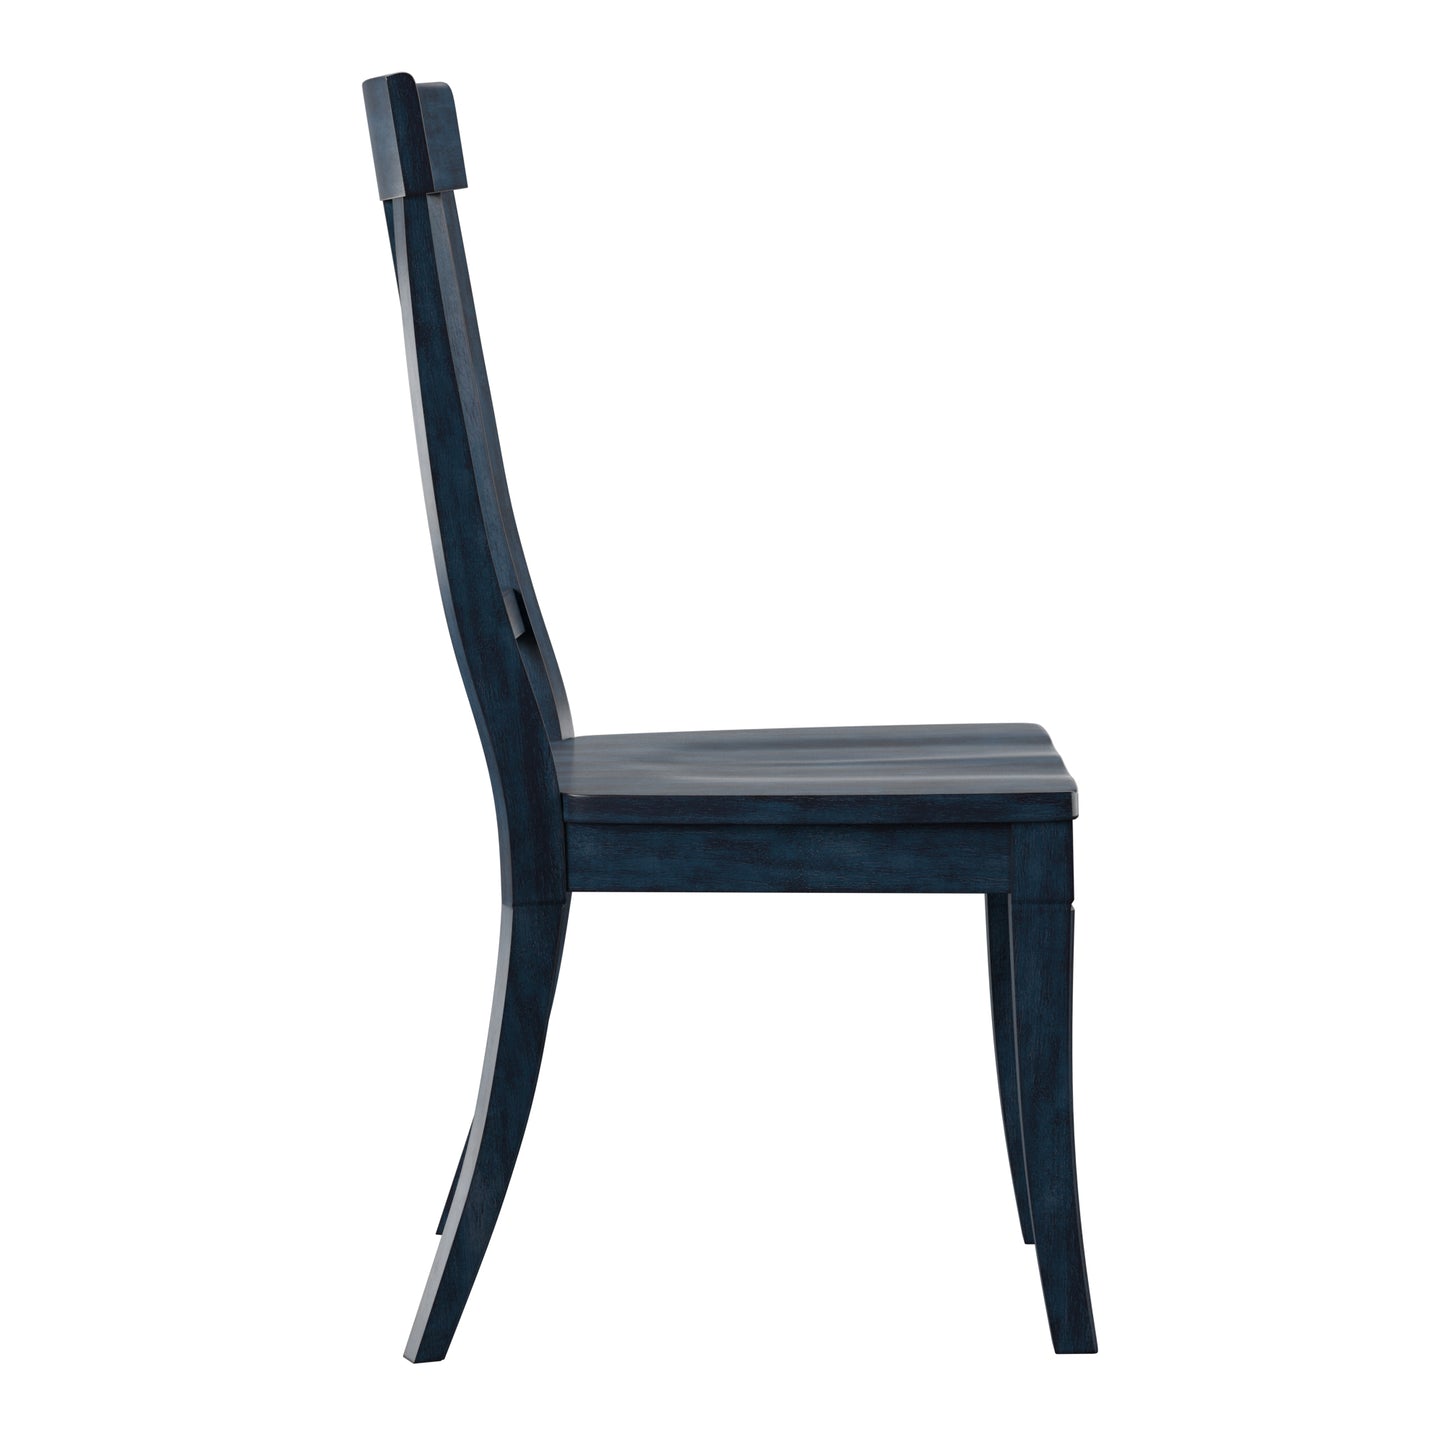 Panel Back Wood Dining Chairs (Set of 2) - Antique Dark Denim Blue Finish